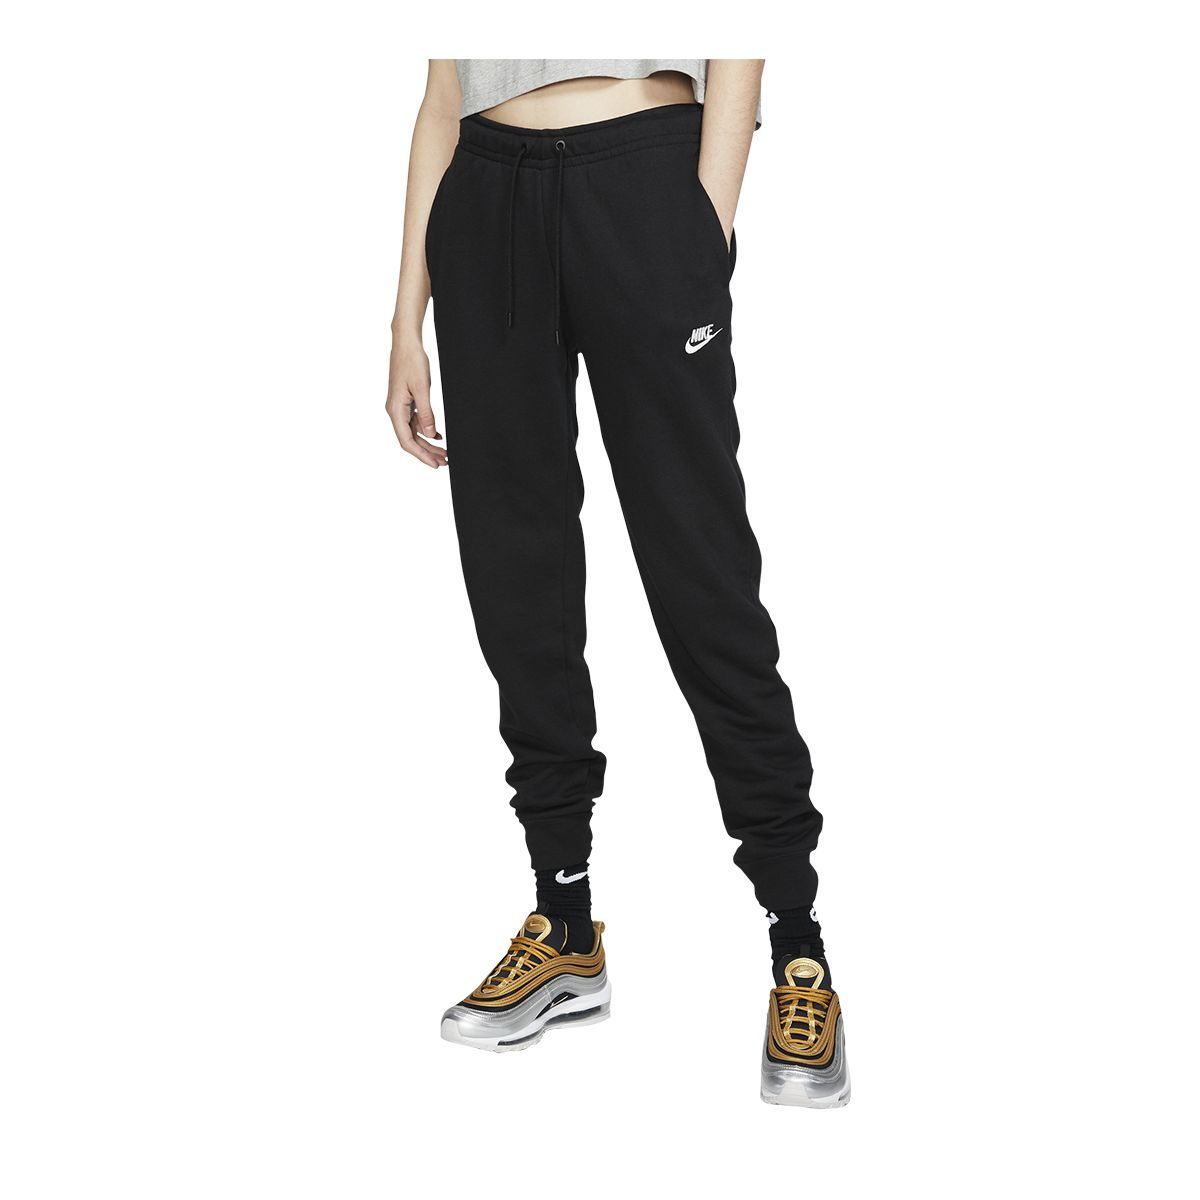 Women's Black Water-resistant Joggers & Sweatpants. Nike IN